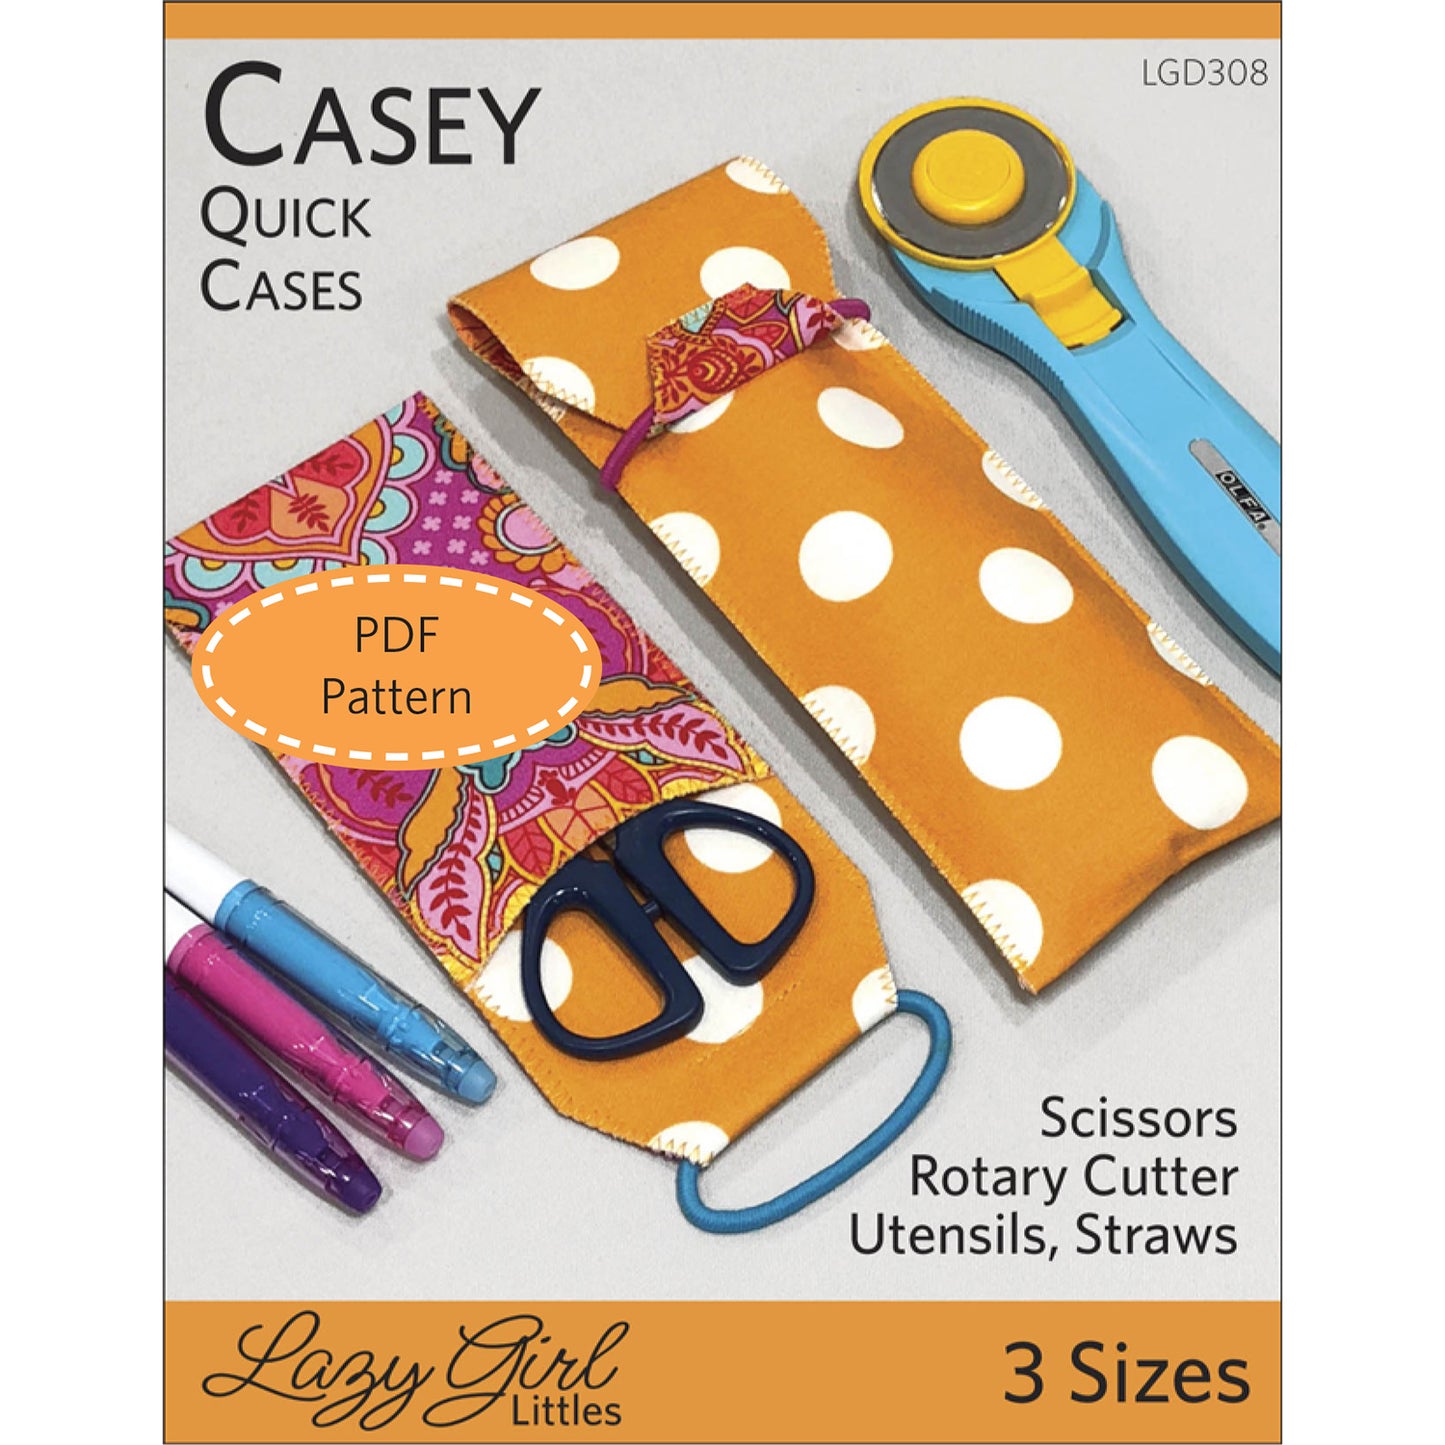 Casey Quick Cases PDF Pattern